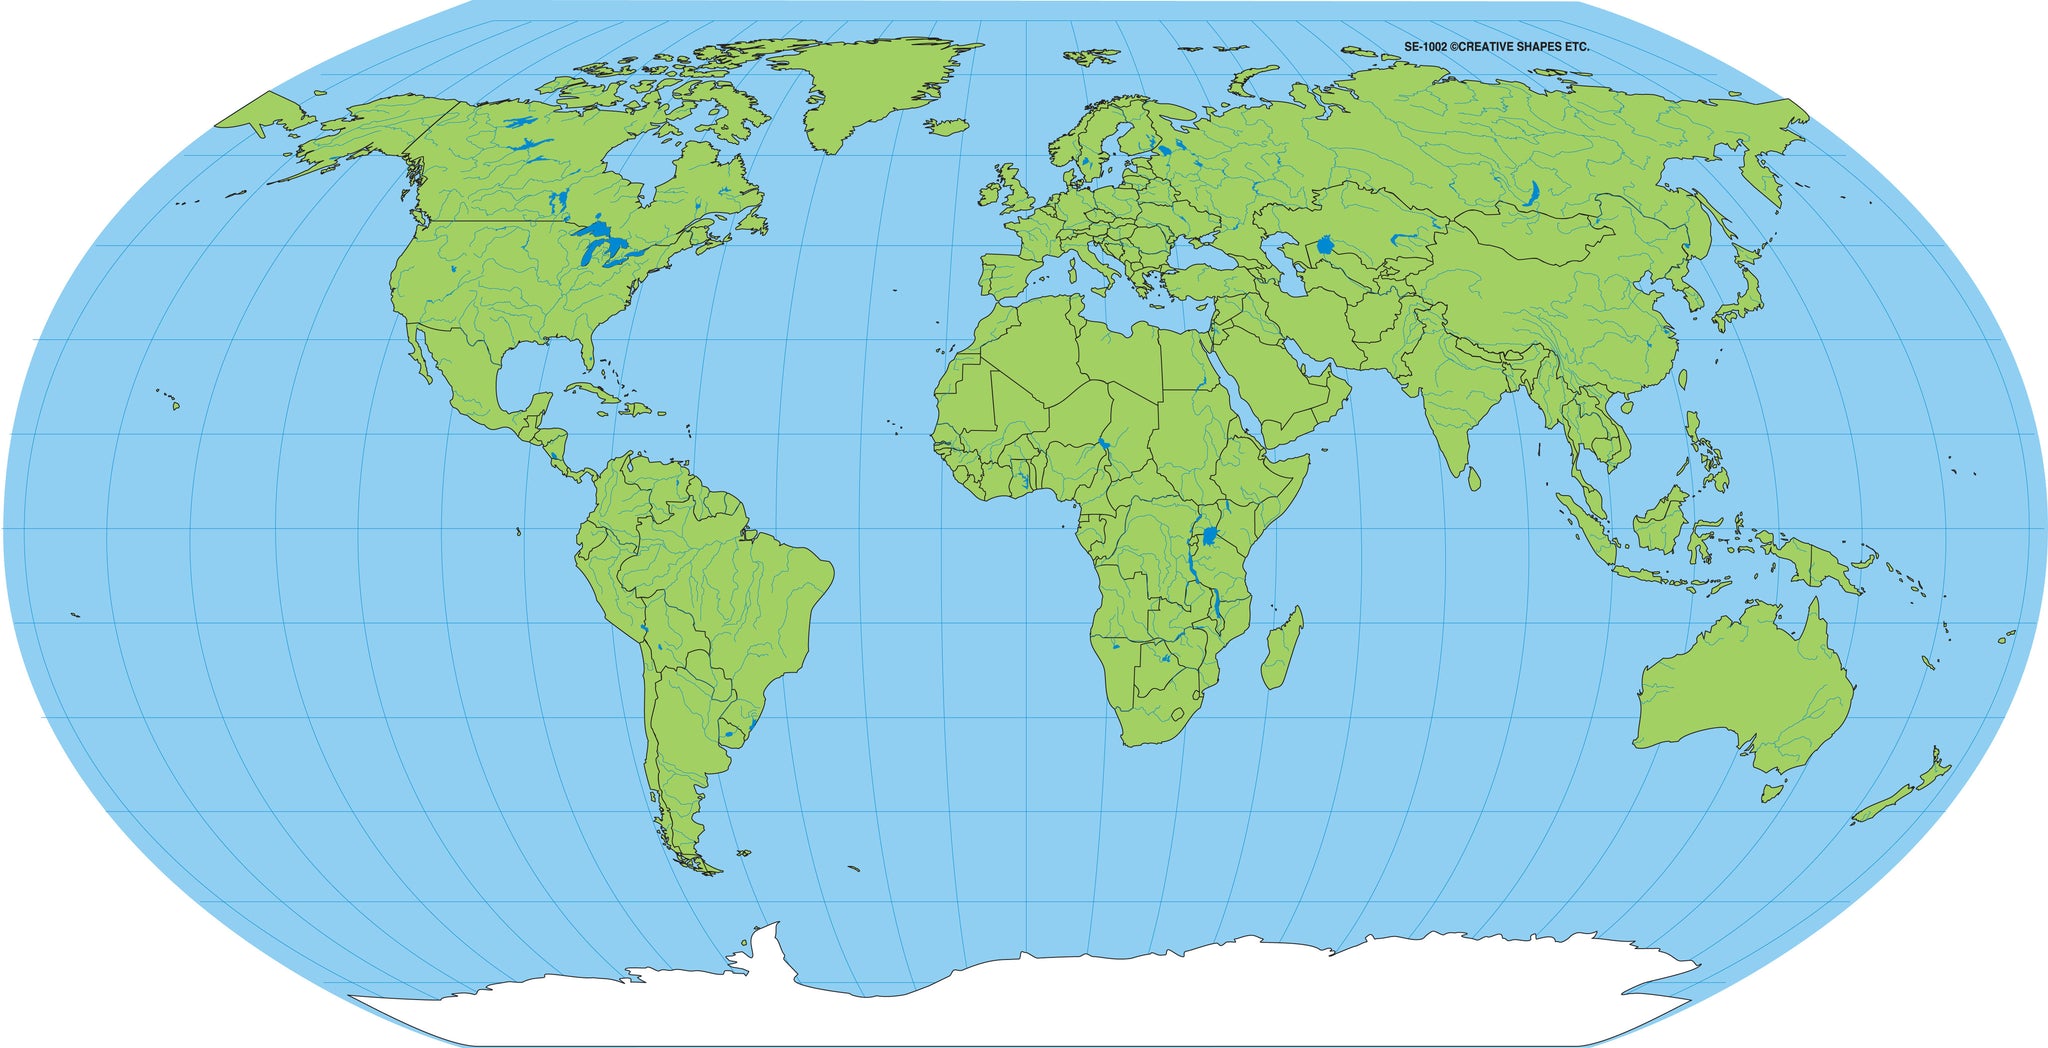 Unlabeled World Practice Map Creative Shapes Etc